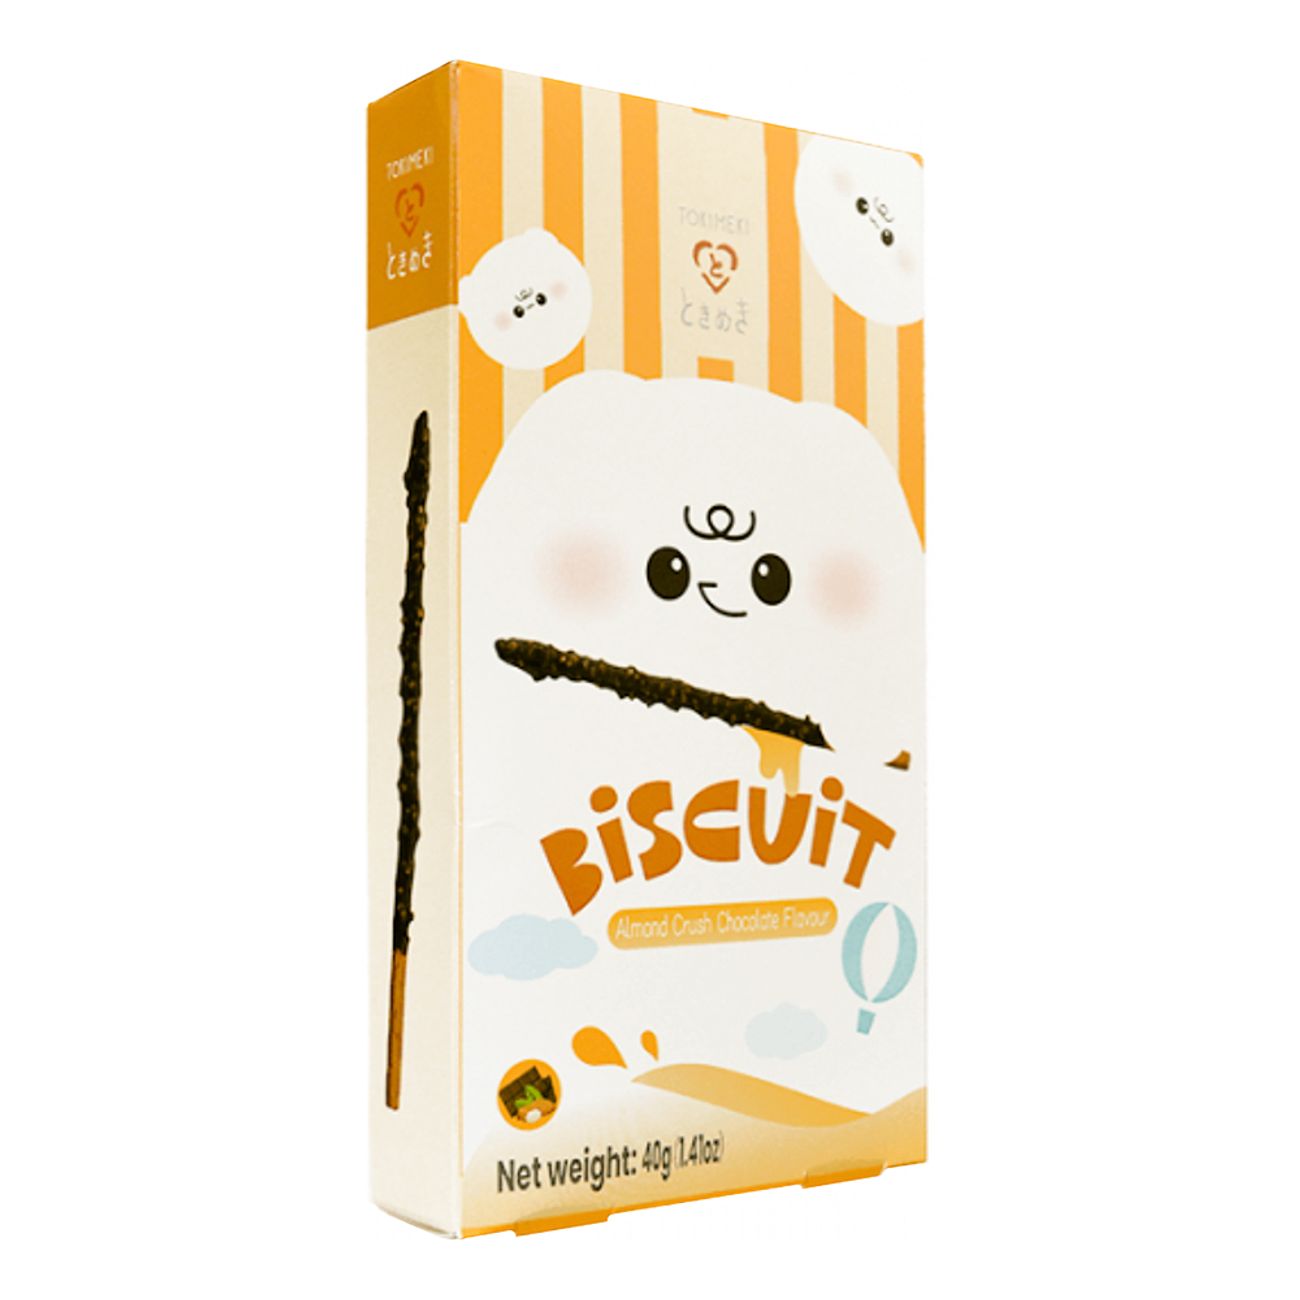 tokimeki-biscuit-stick-almond-crush-choco-100869-1